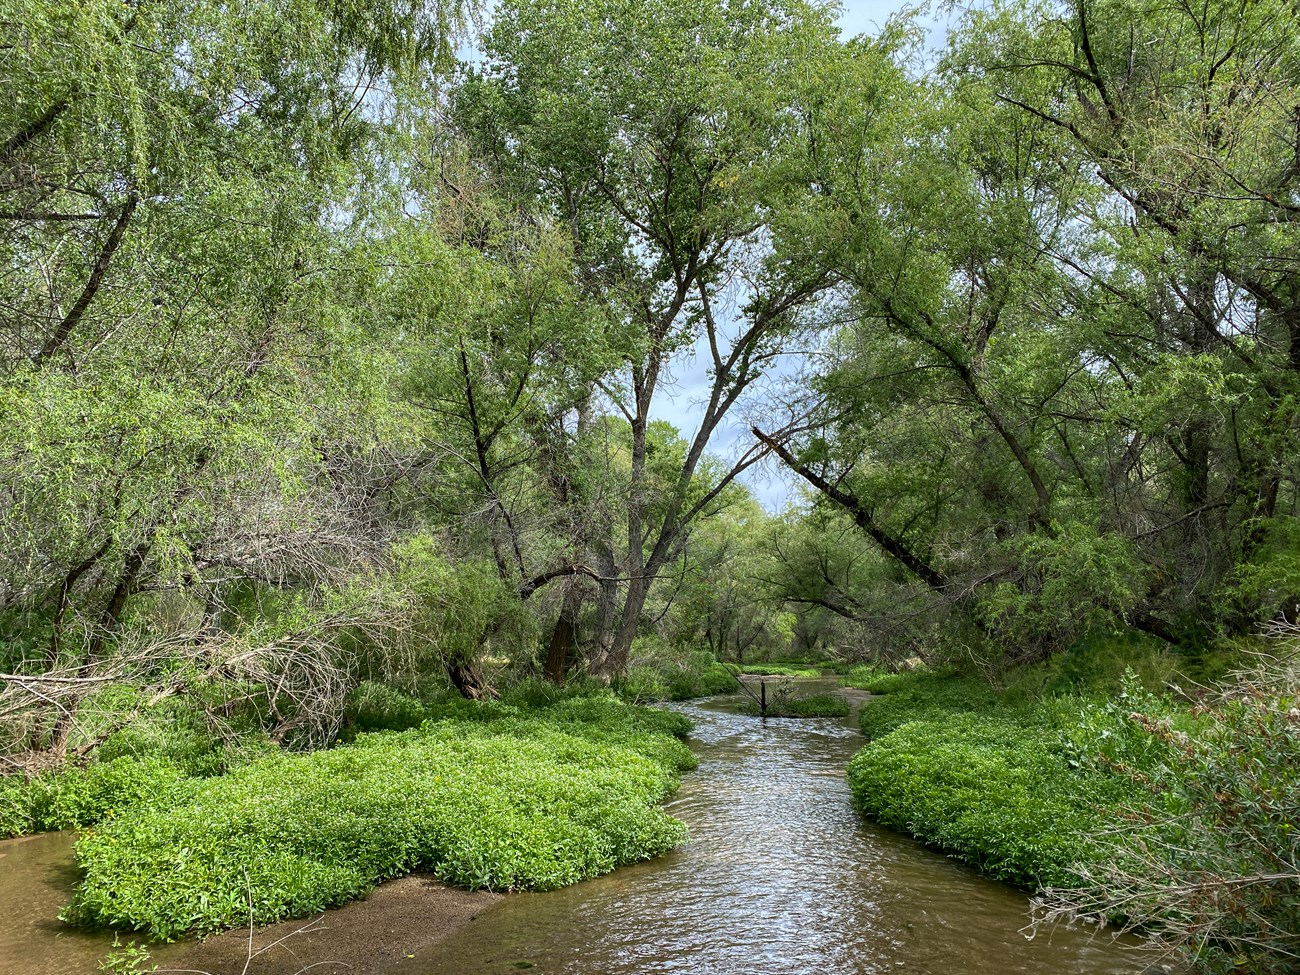 A river flows through tall, lush green trees, grass, and bushes.